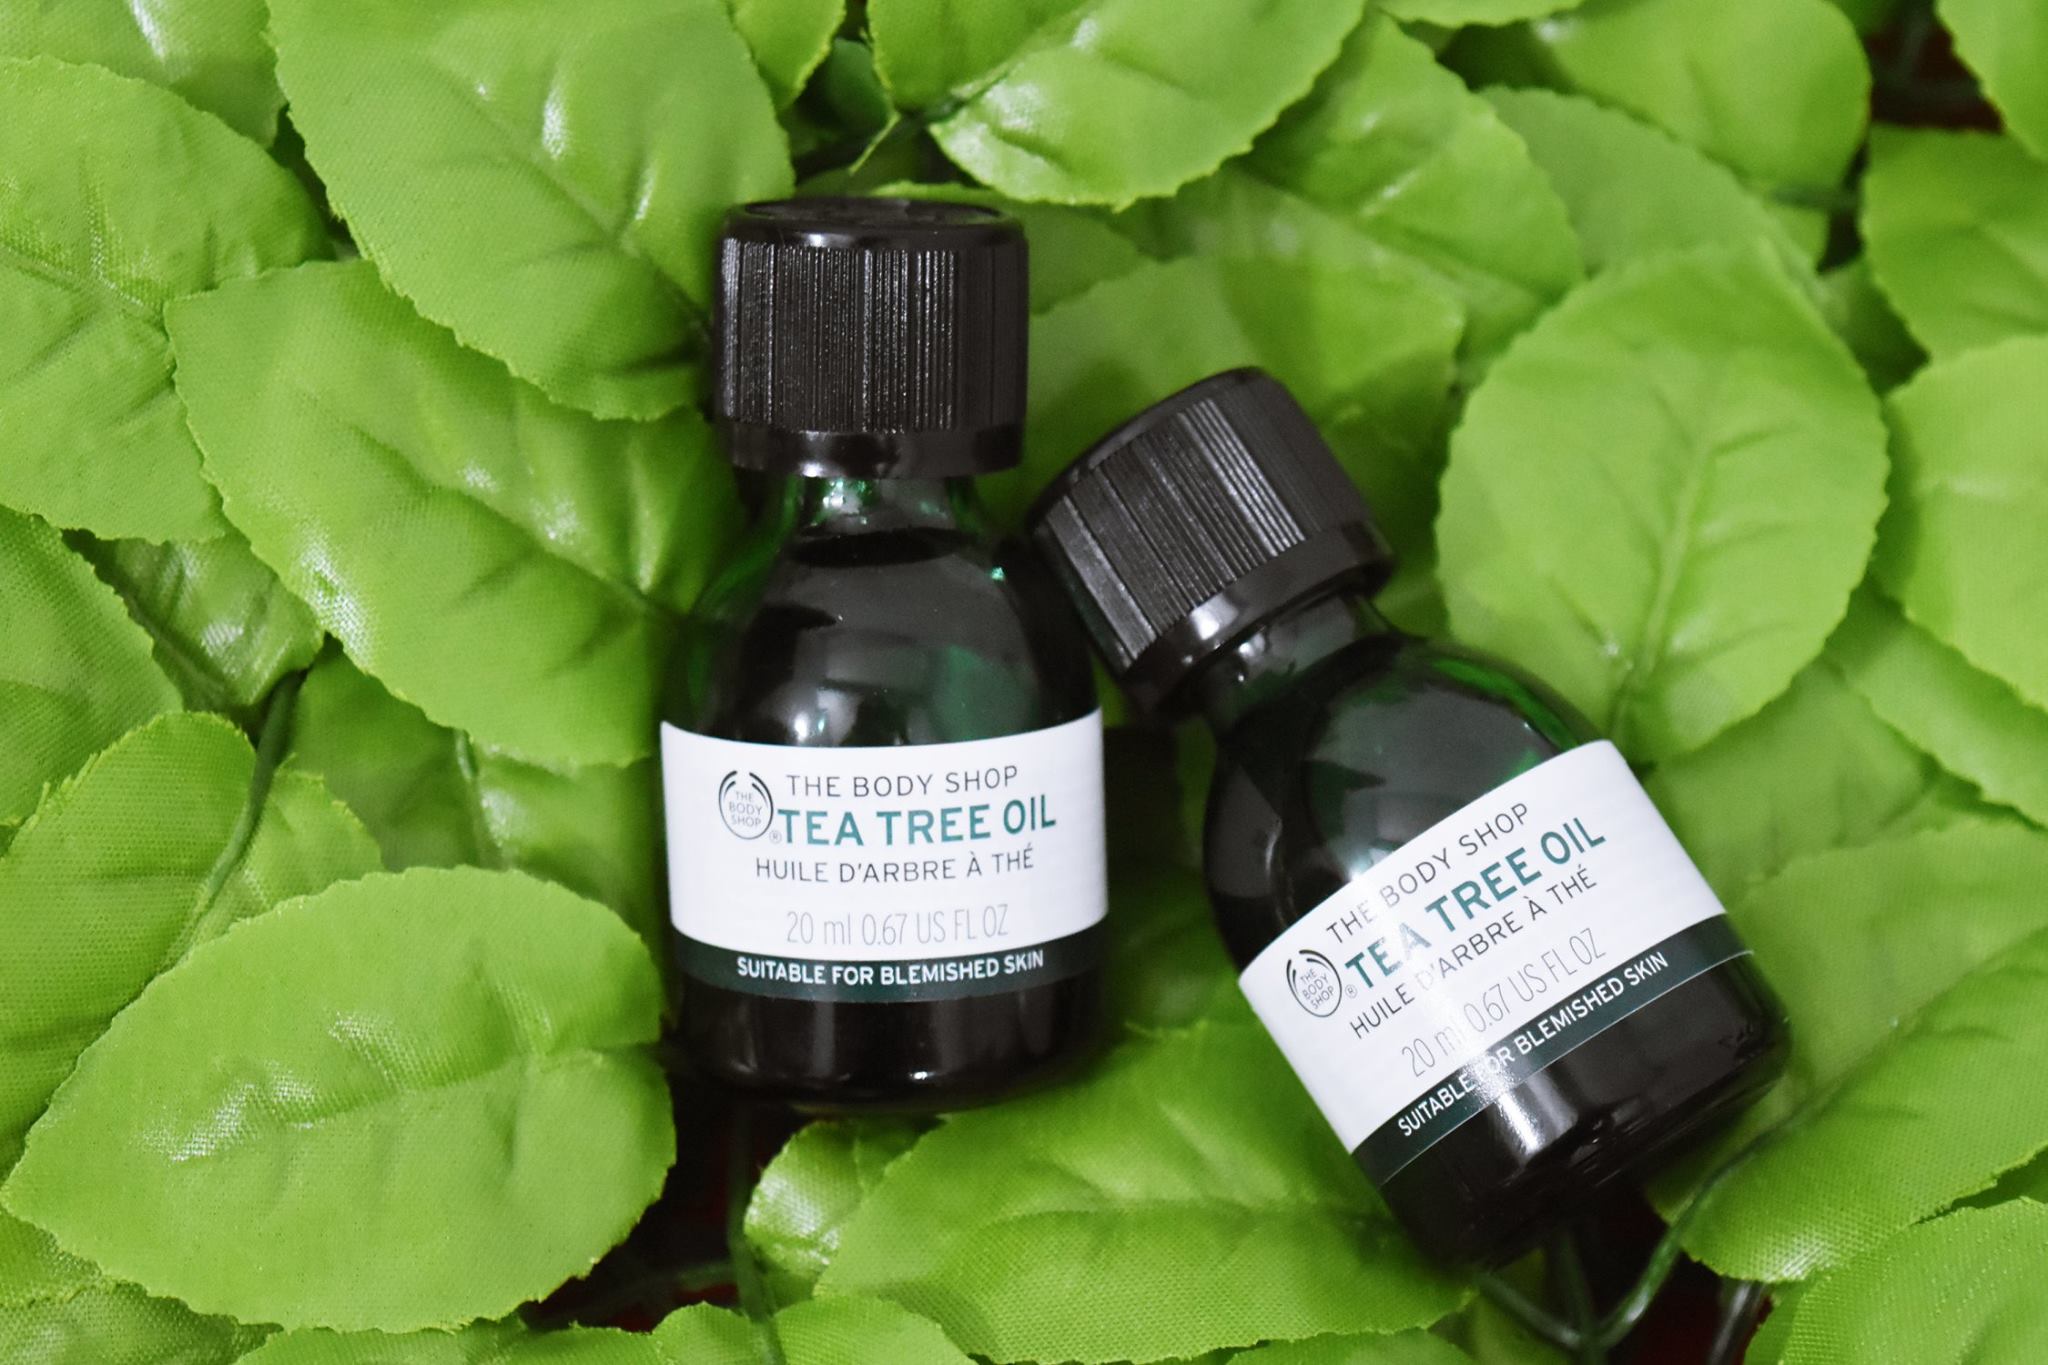 The Body Shop Tea Tree Oil - Tinh Dầu Tràm Trà Giảm Mụn (10ml & 20ml)